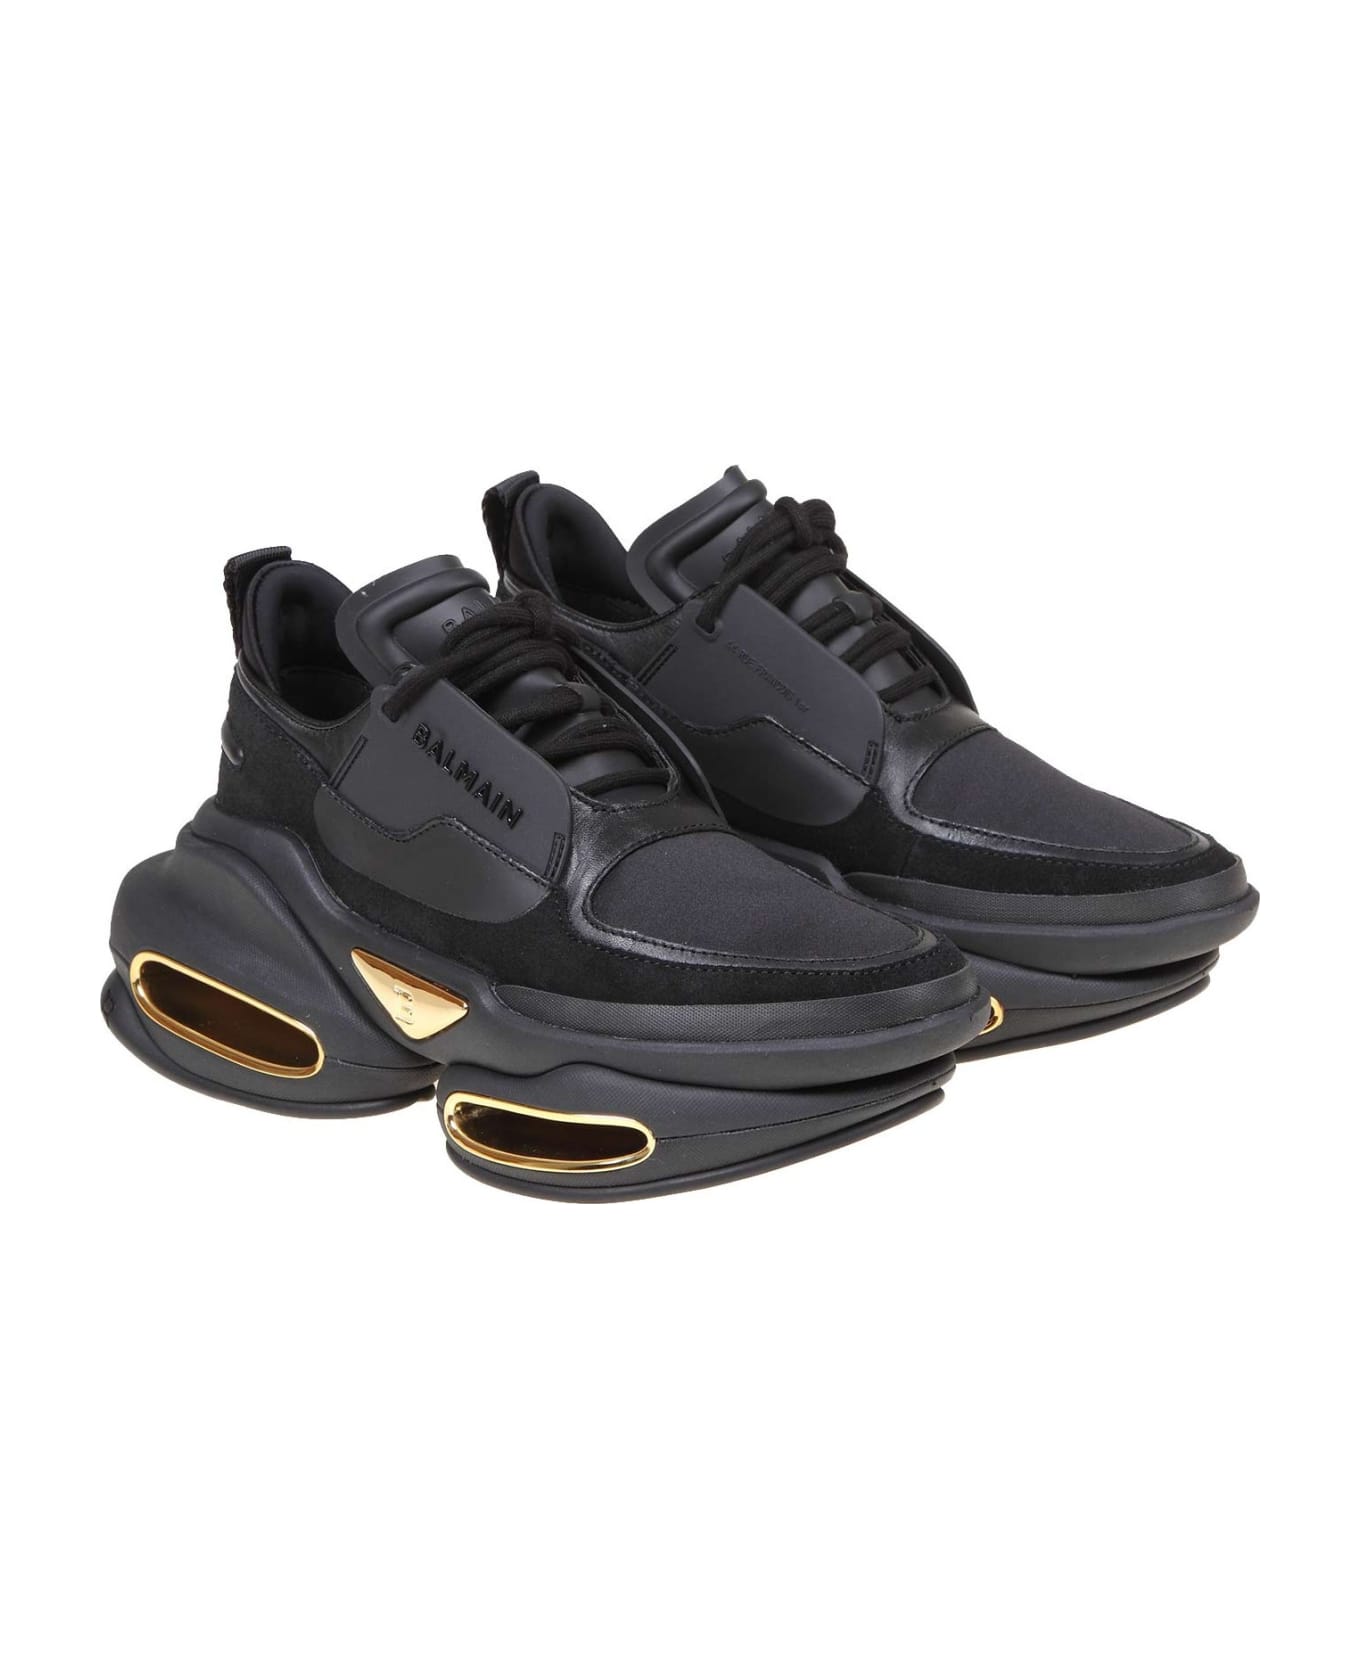 Balmain B-bold Sneakers In Black Leather And Fabric - Black